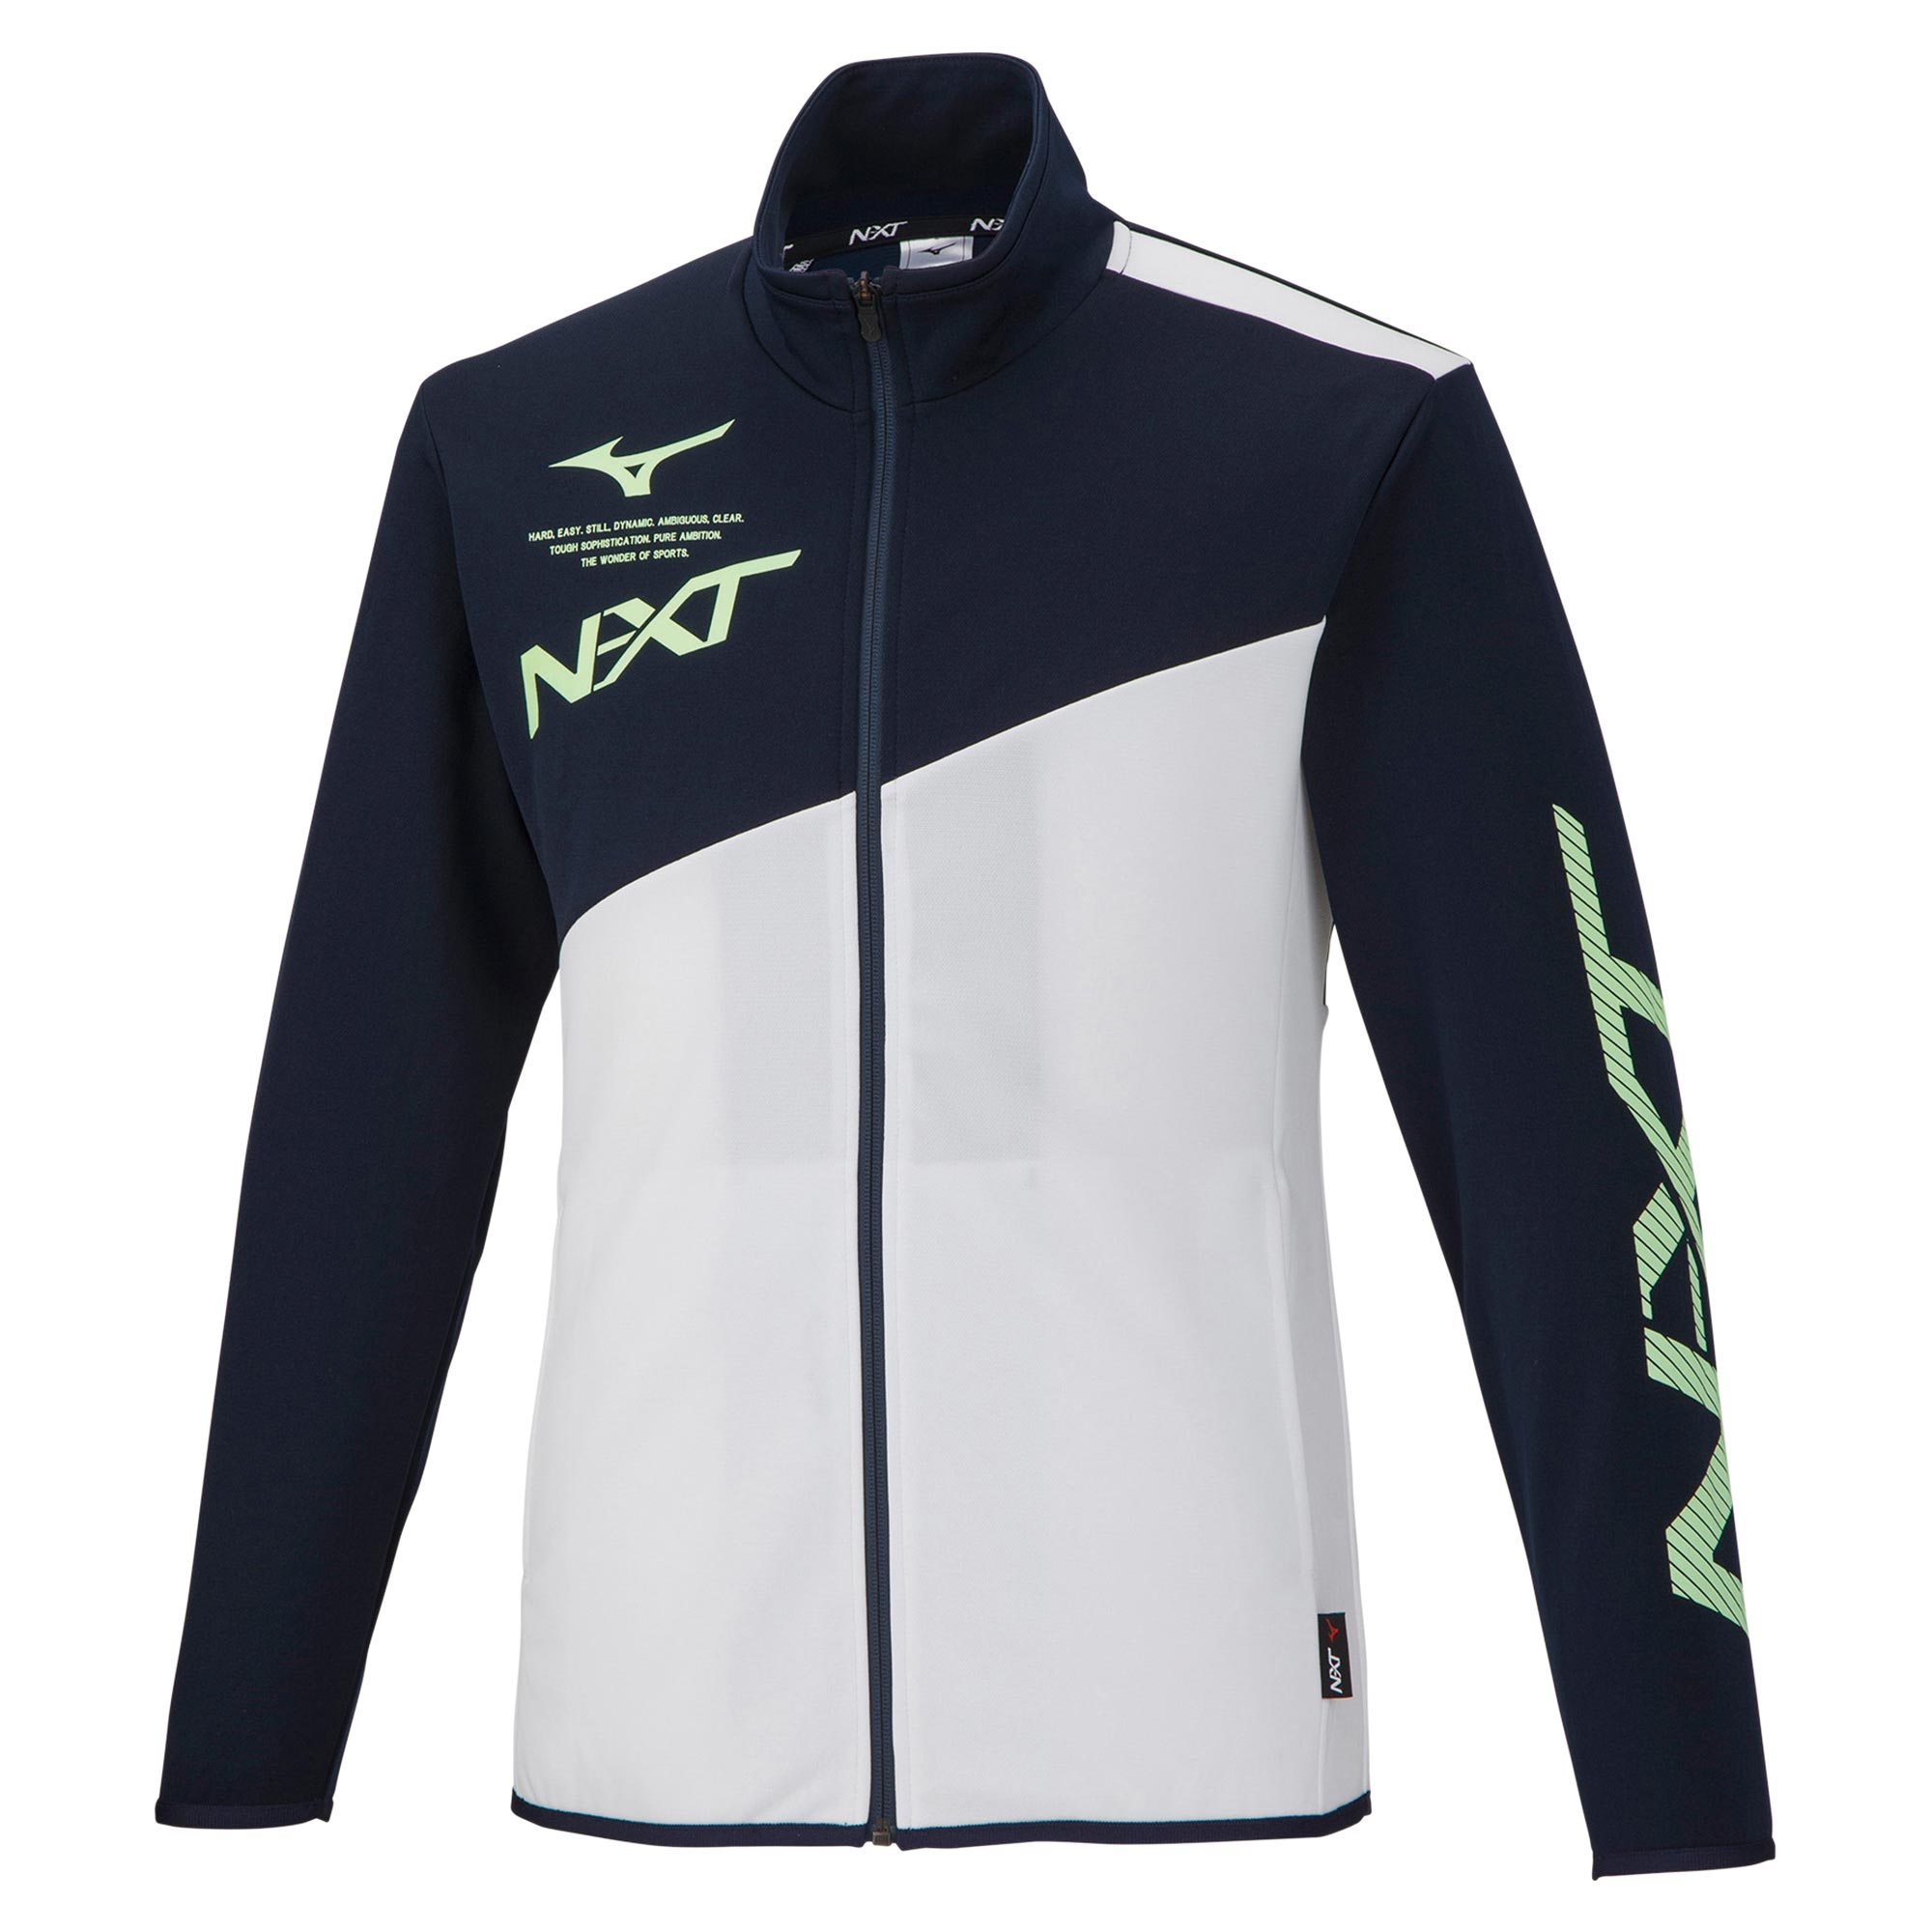 N-XTウォームアップジャケット[ユニセックス]|32JC2210|ミズノトレーニング|トレーニングウエア|ミズノ公式オンライン